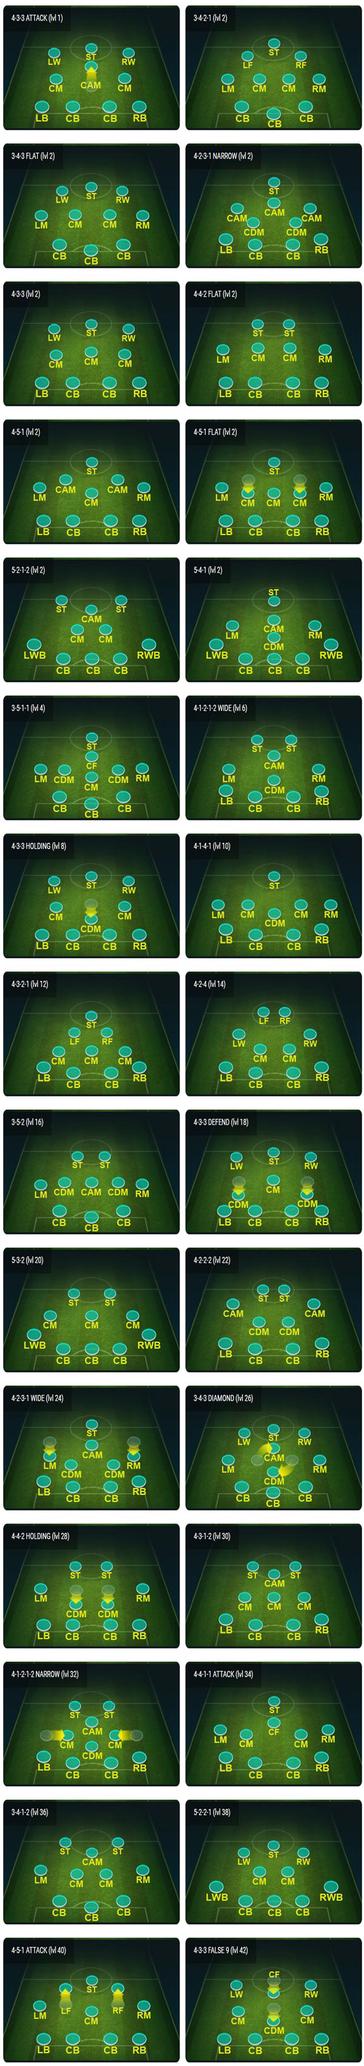 FIFA Mobile 21 Formation: The Ultimate Guide - FIFAMobileGuide.com